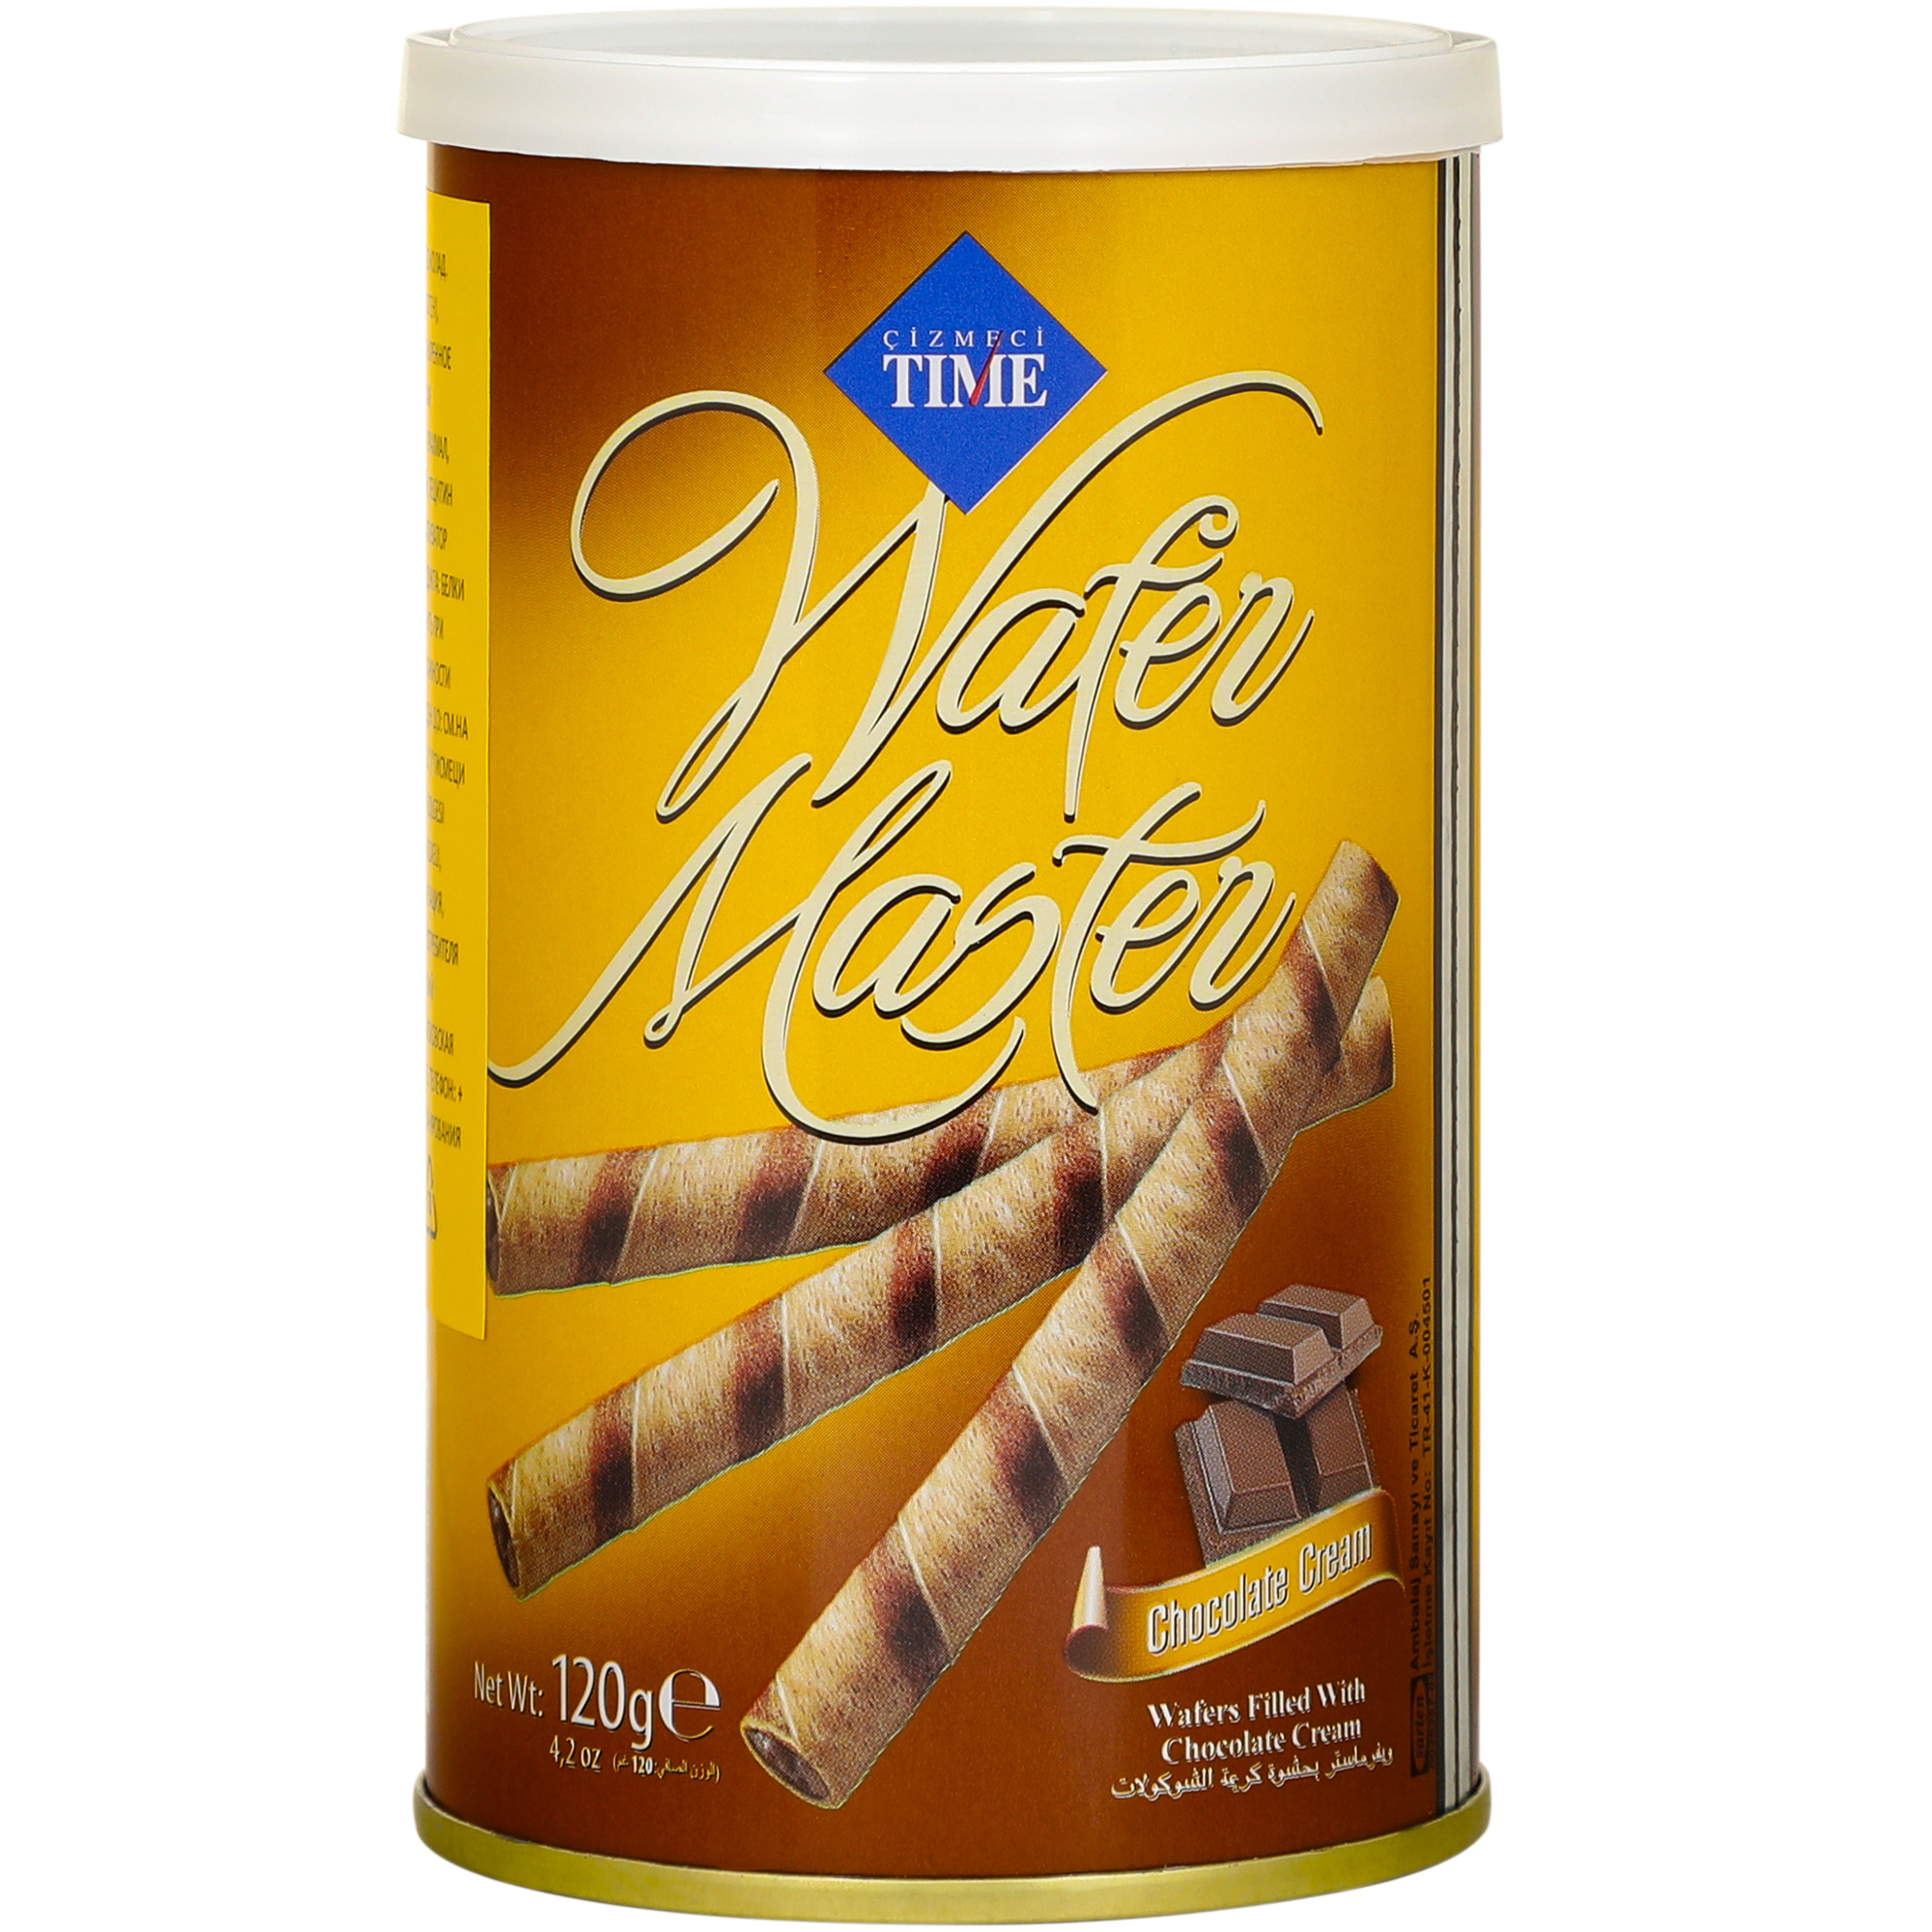 Трубочки Cizmeci Time вафельные wafer master шоколад, 120 г